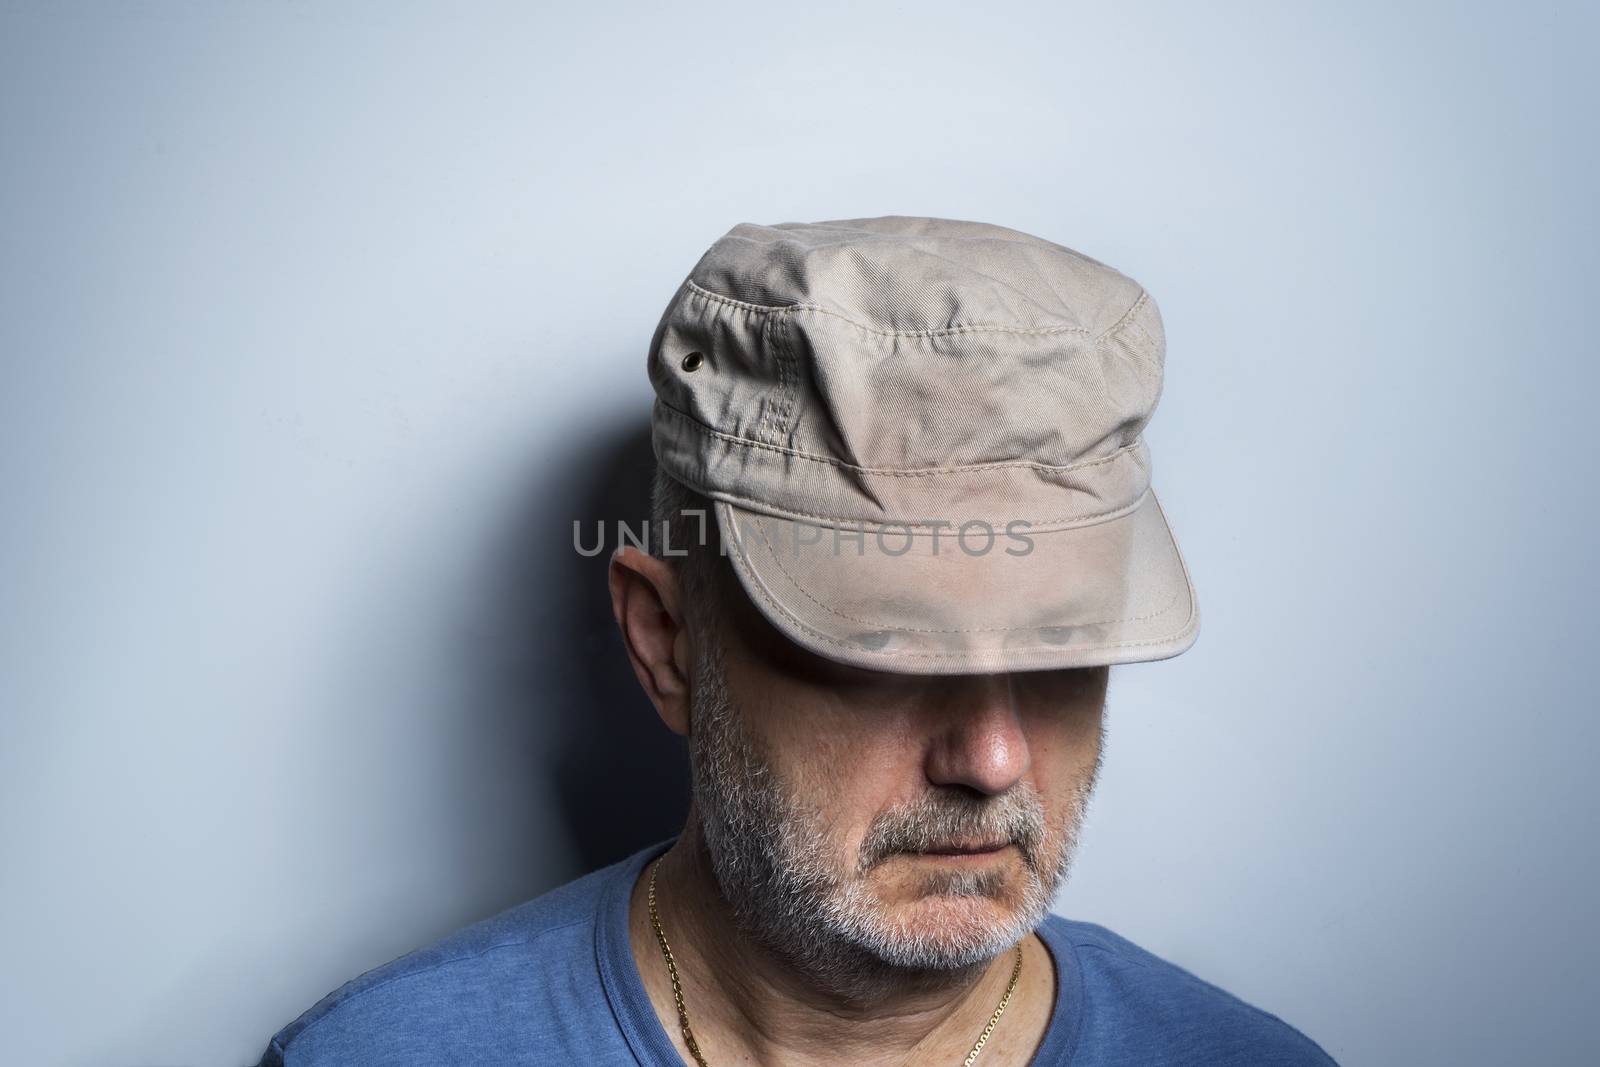 a look hidden under the cap